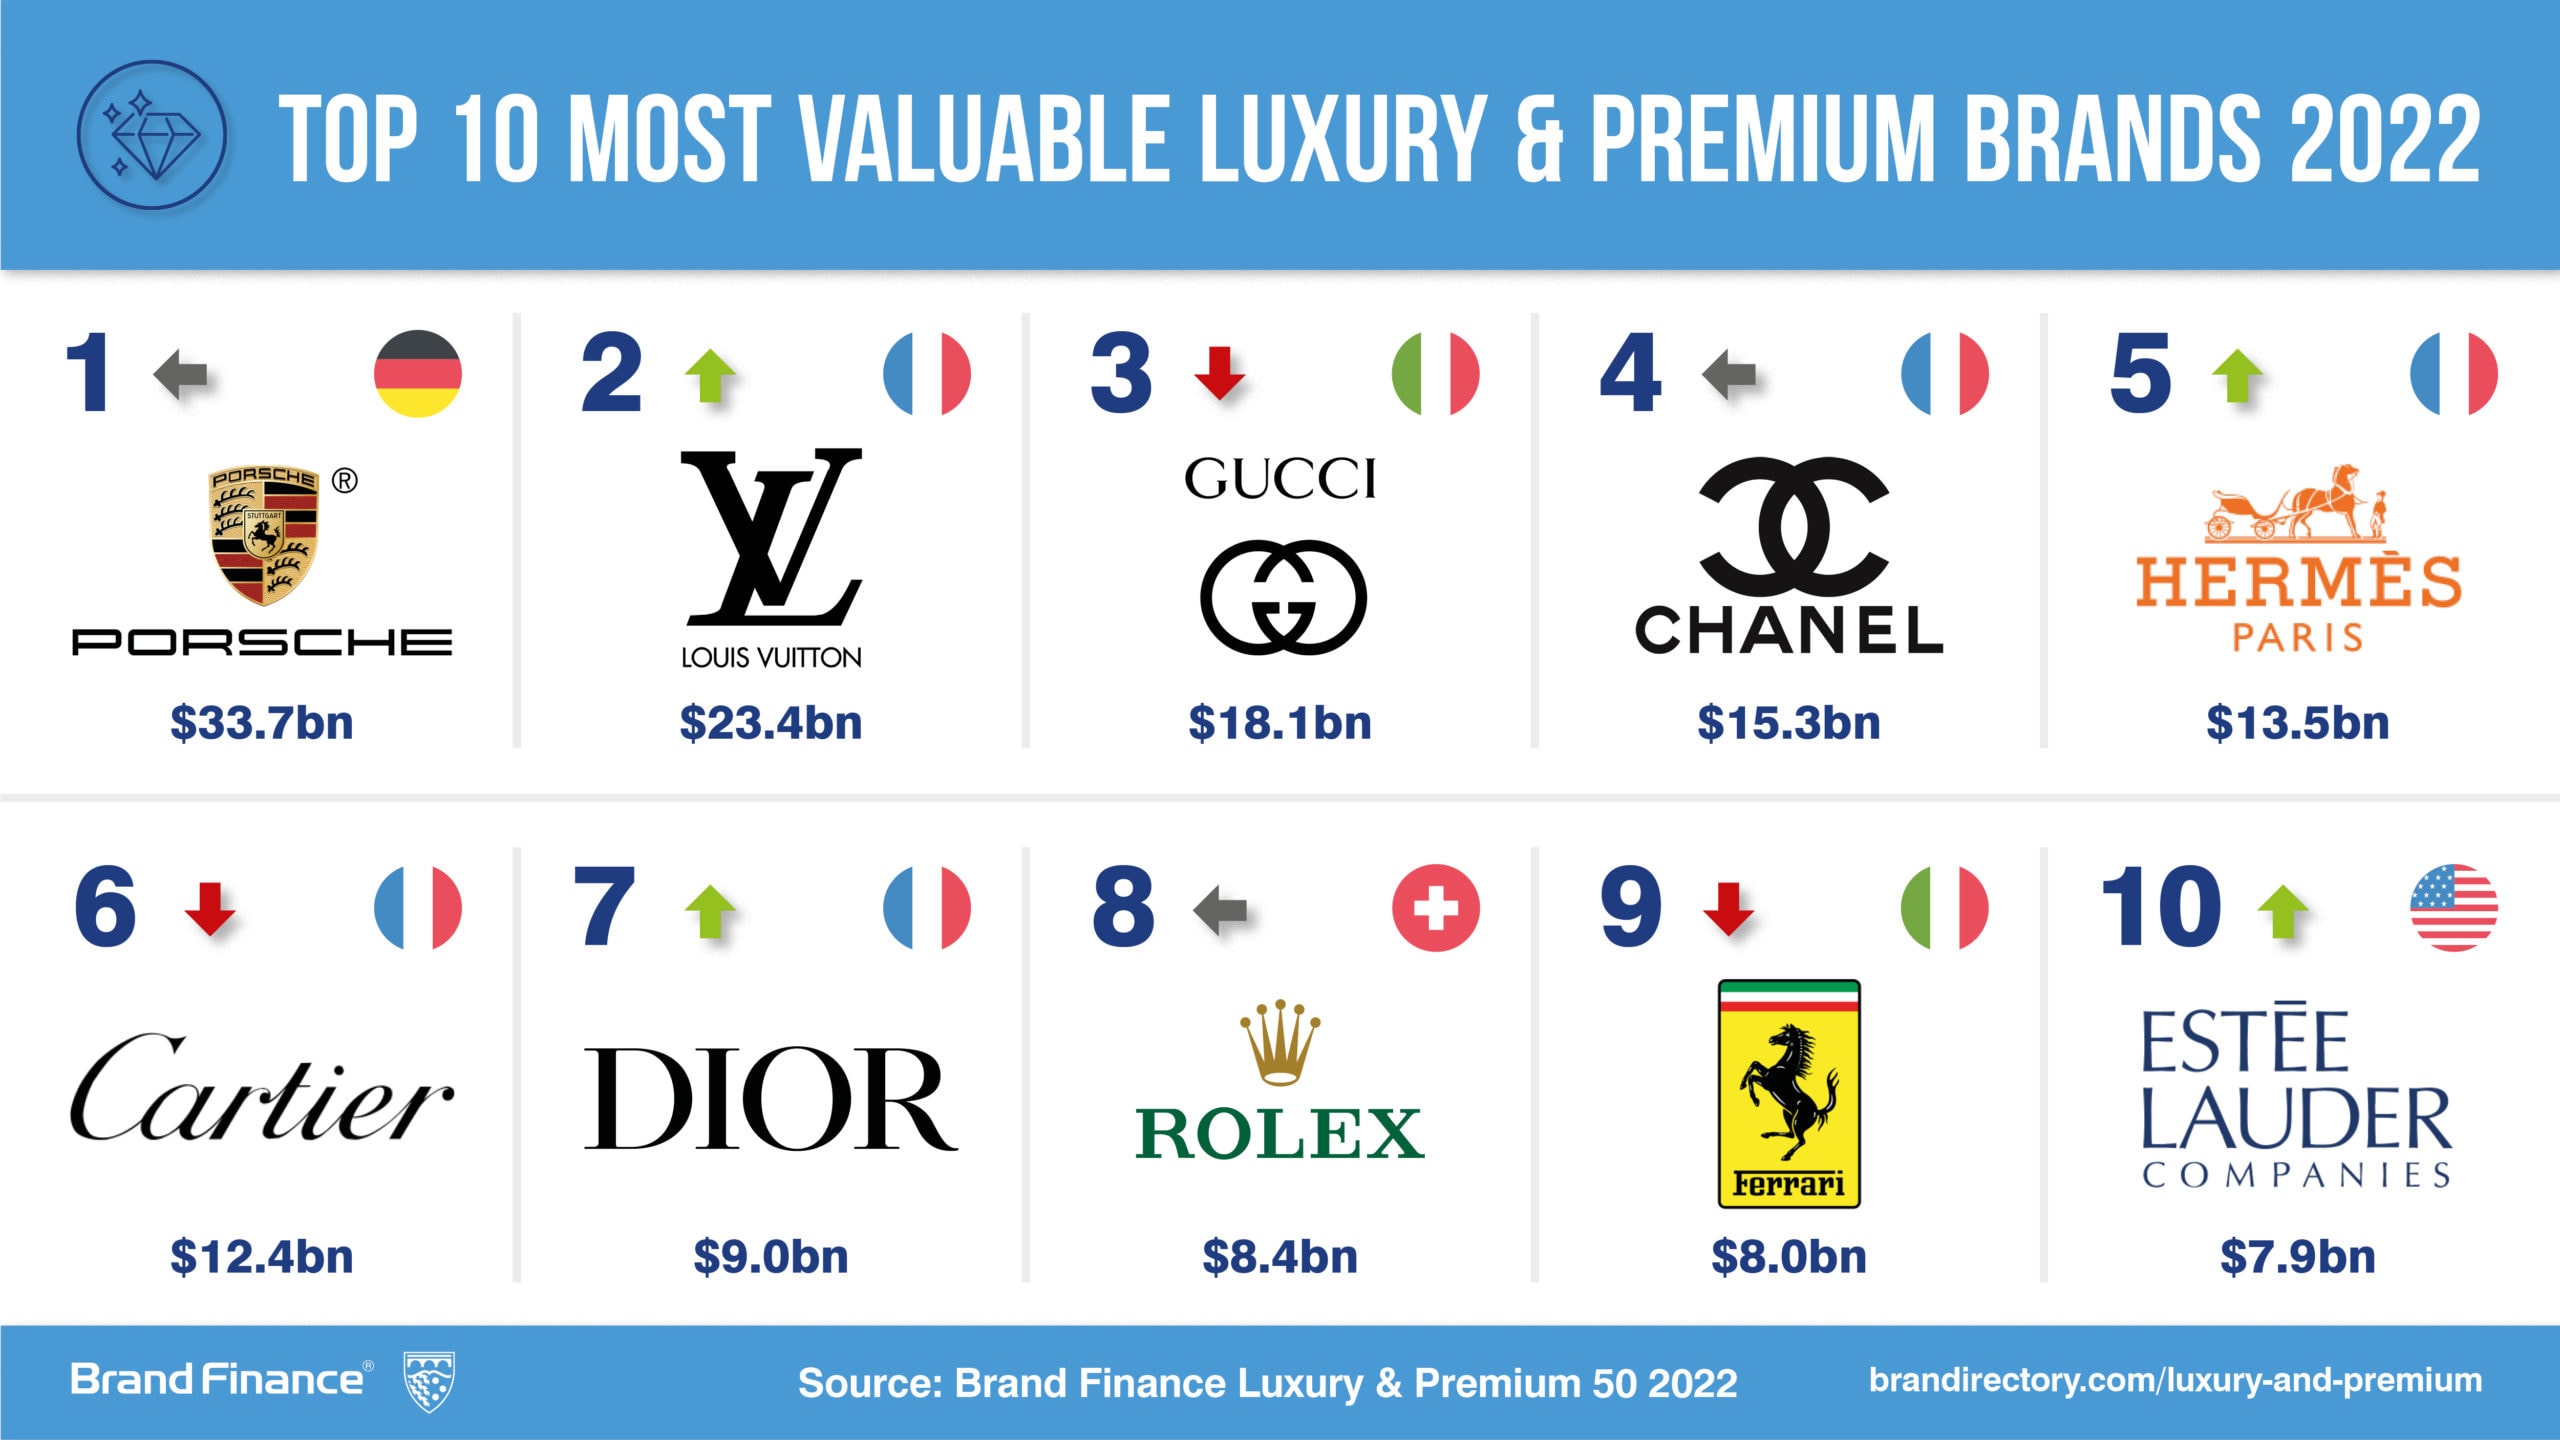 Porsche is most valuable luxury brand | Press Release | Brand Finance